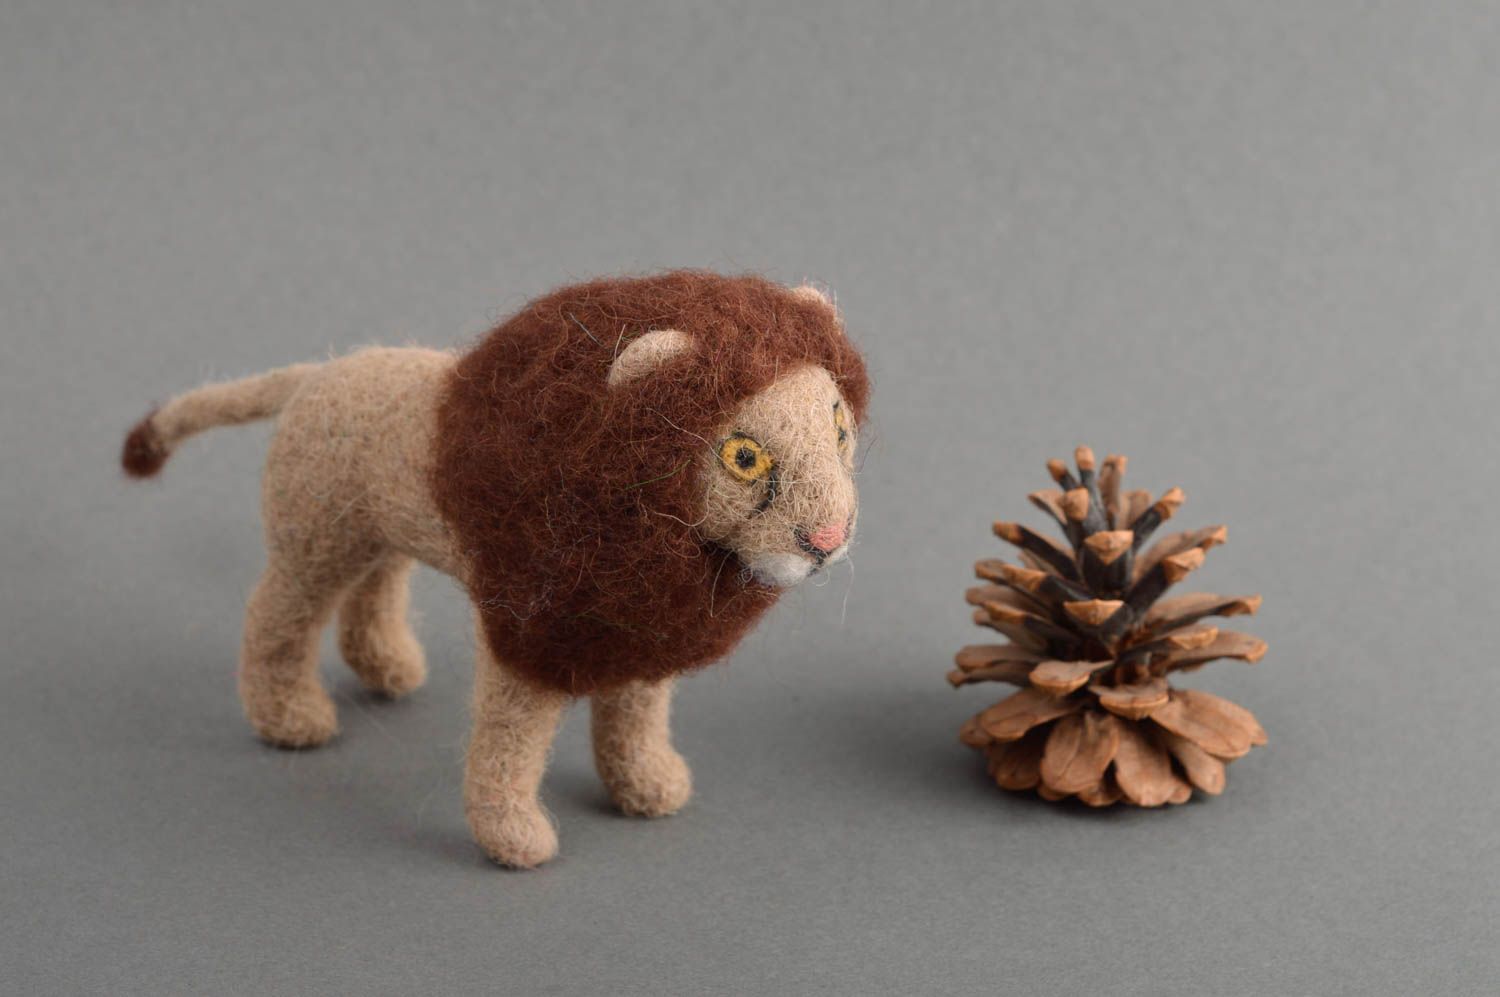 Handmade toy animal toy for gift ideas decor ideas unusual woolen toys photo 1